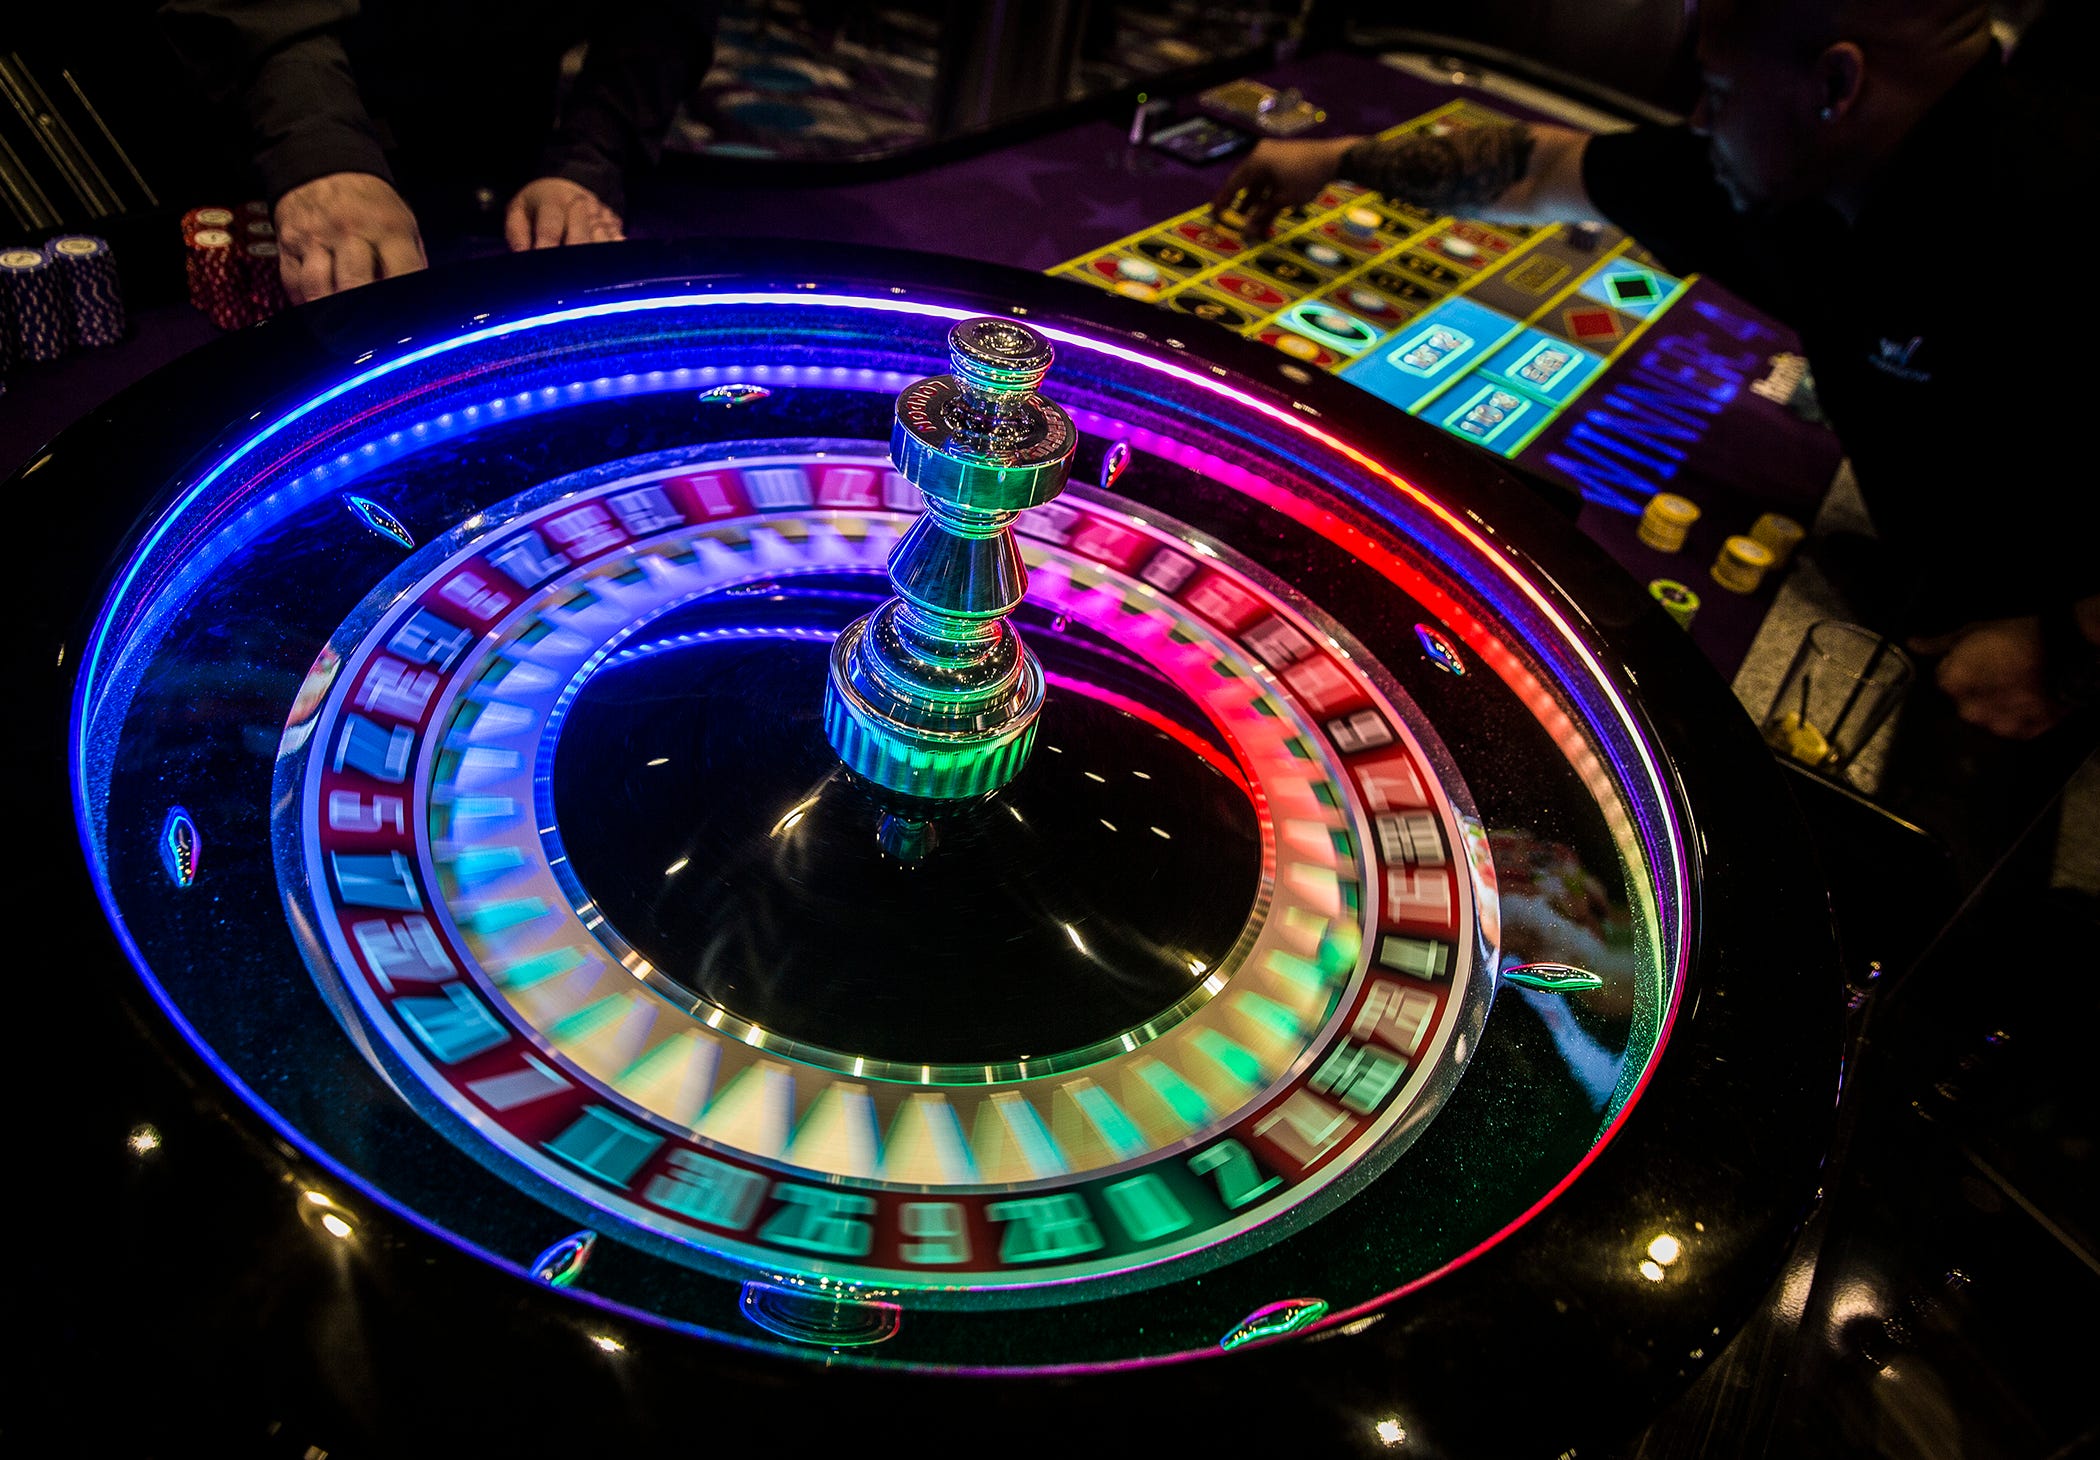 Variation of Popular Casino Game Roulette